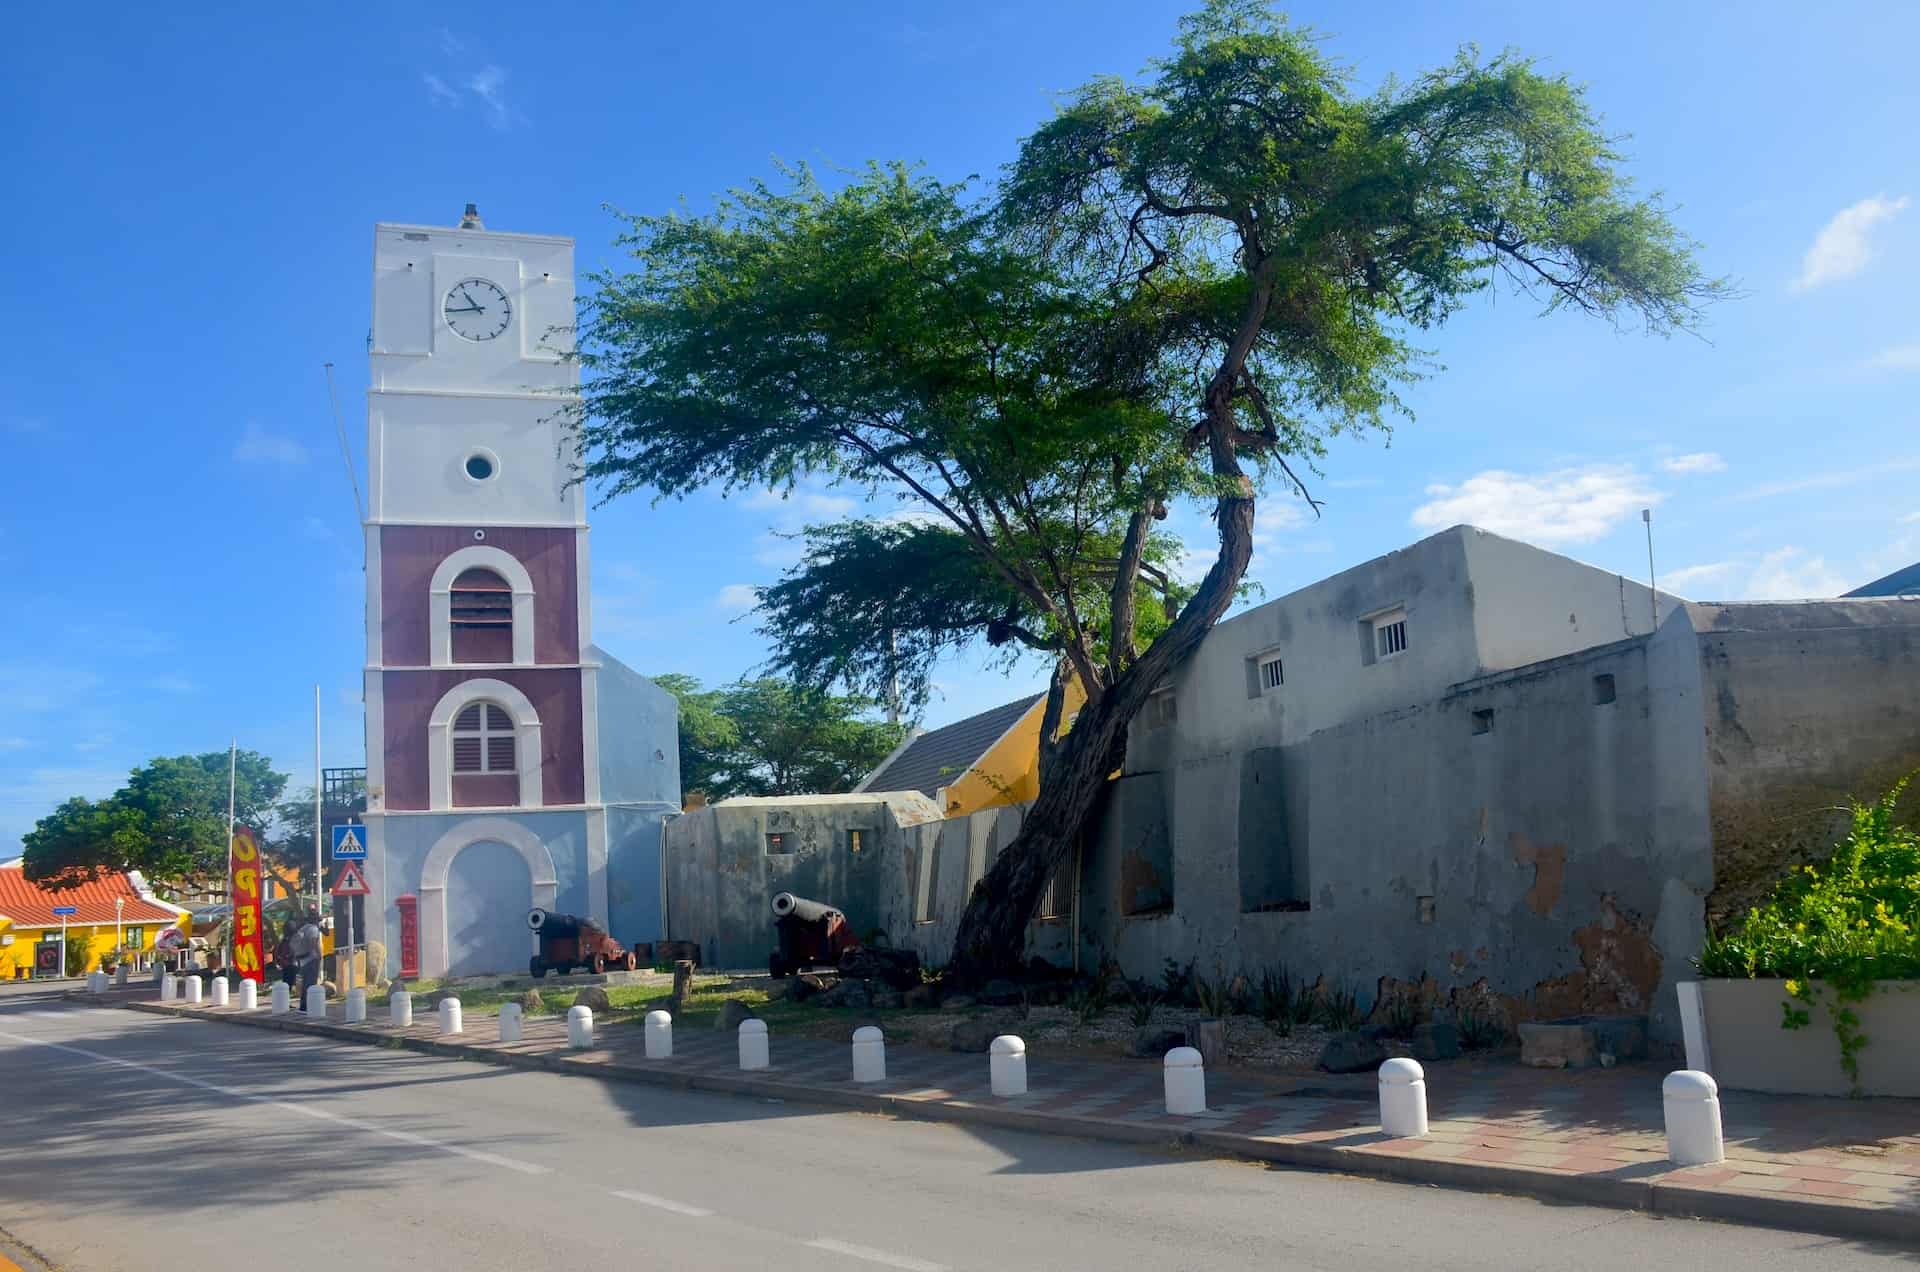 Fort Zoutman in Oranjestad, Aruba